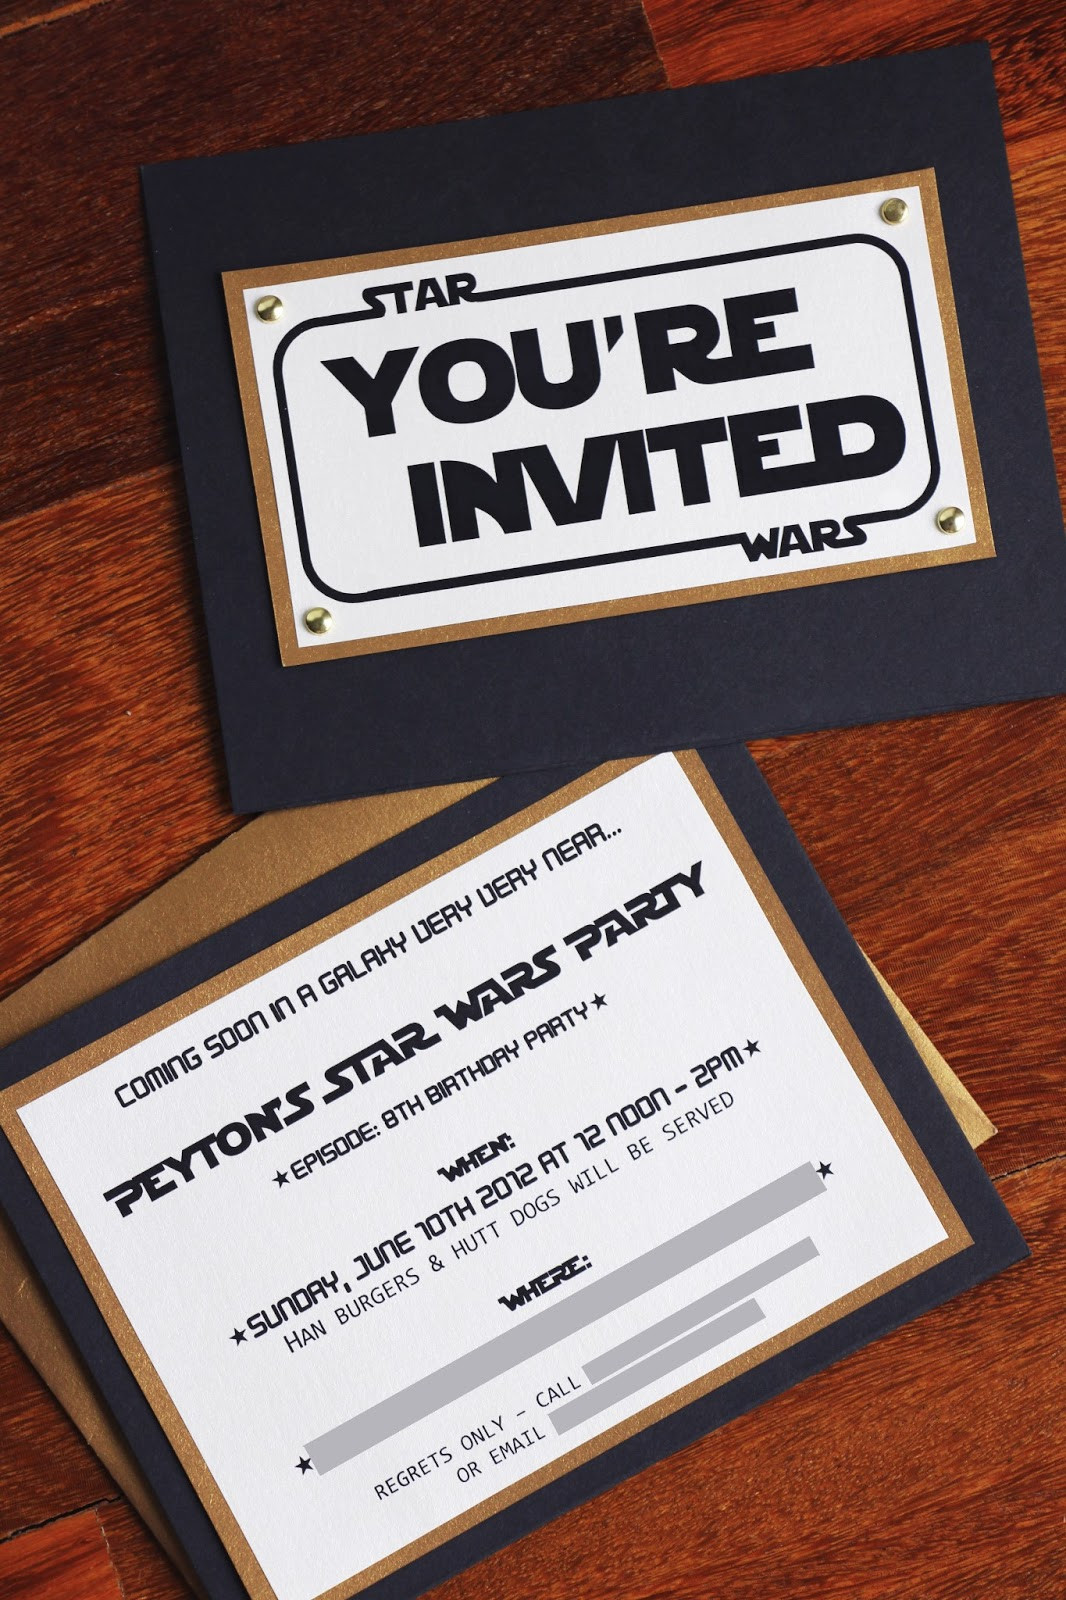 Star Wars Birthday Party Invitations
 The Contemplative Creative Star Wars Party Invitation